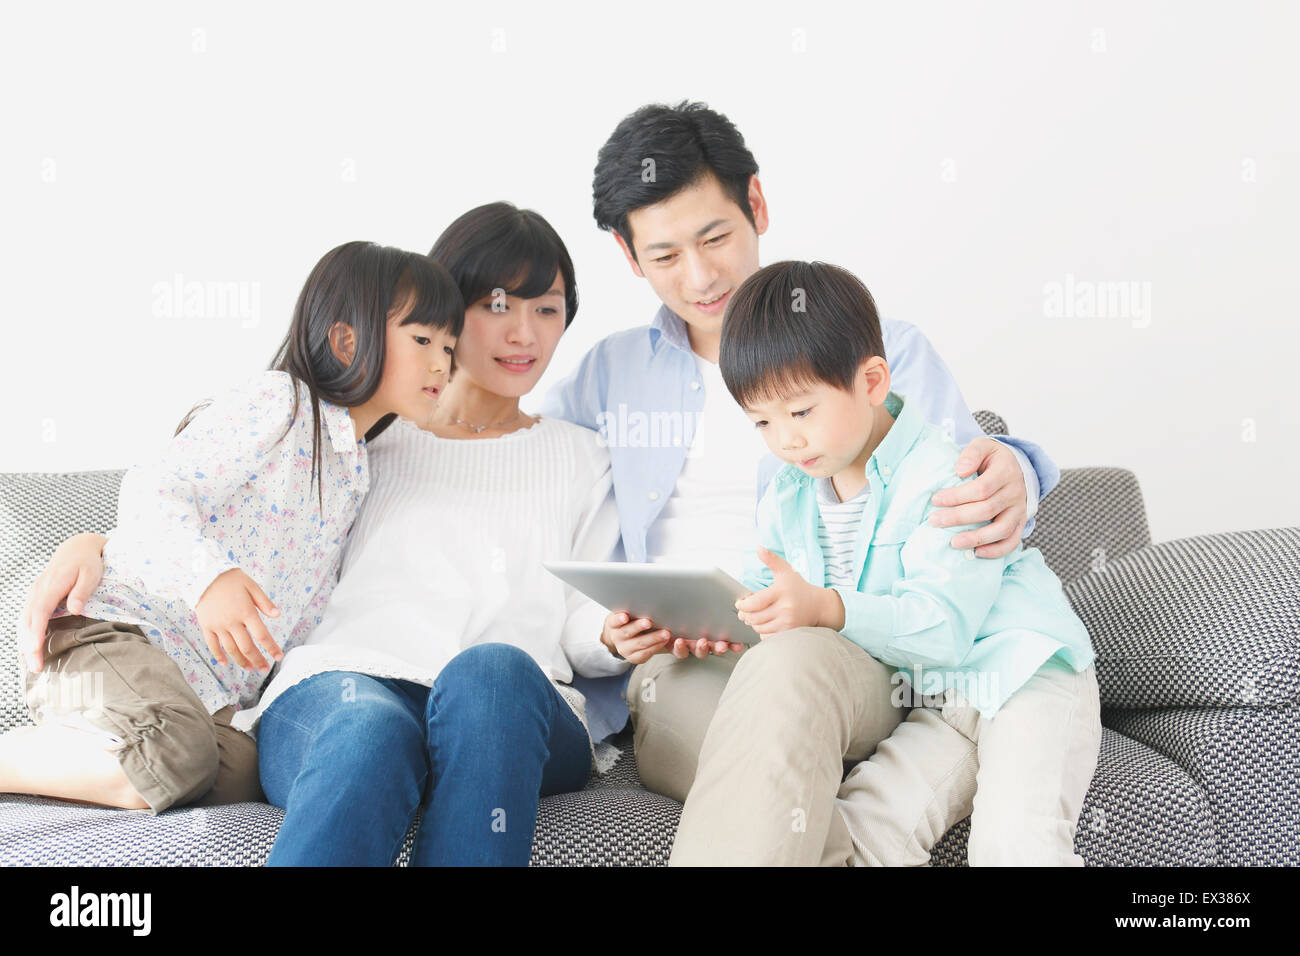 Japanese family on the sofa Stock Photo